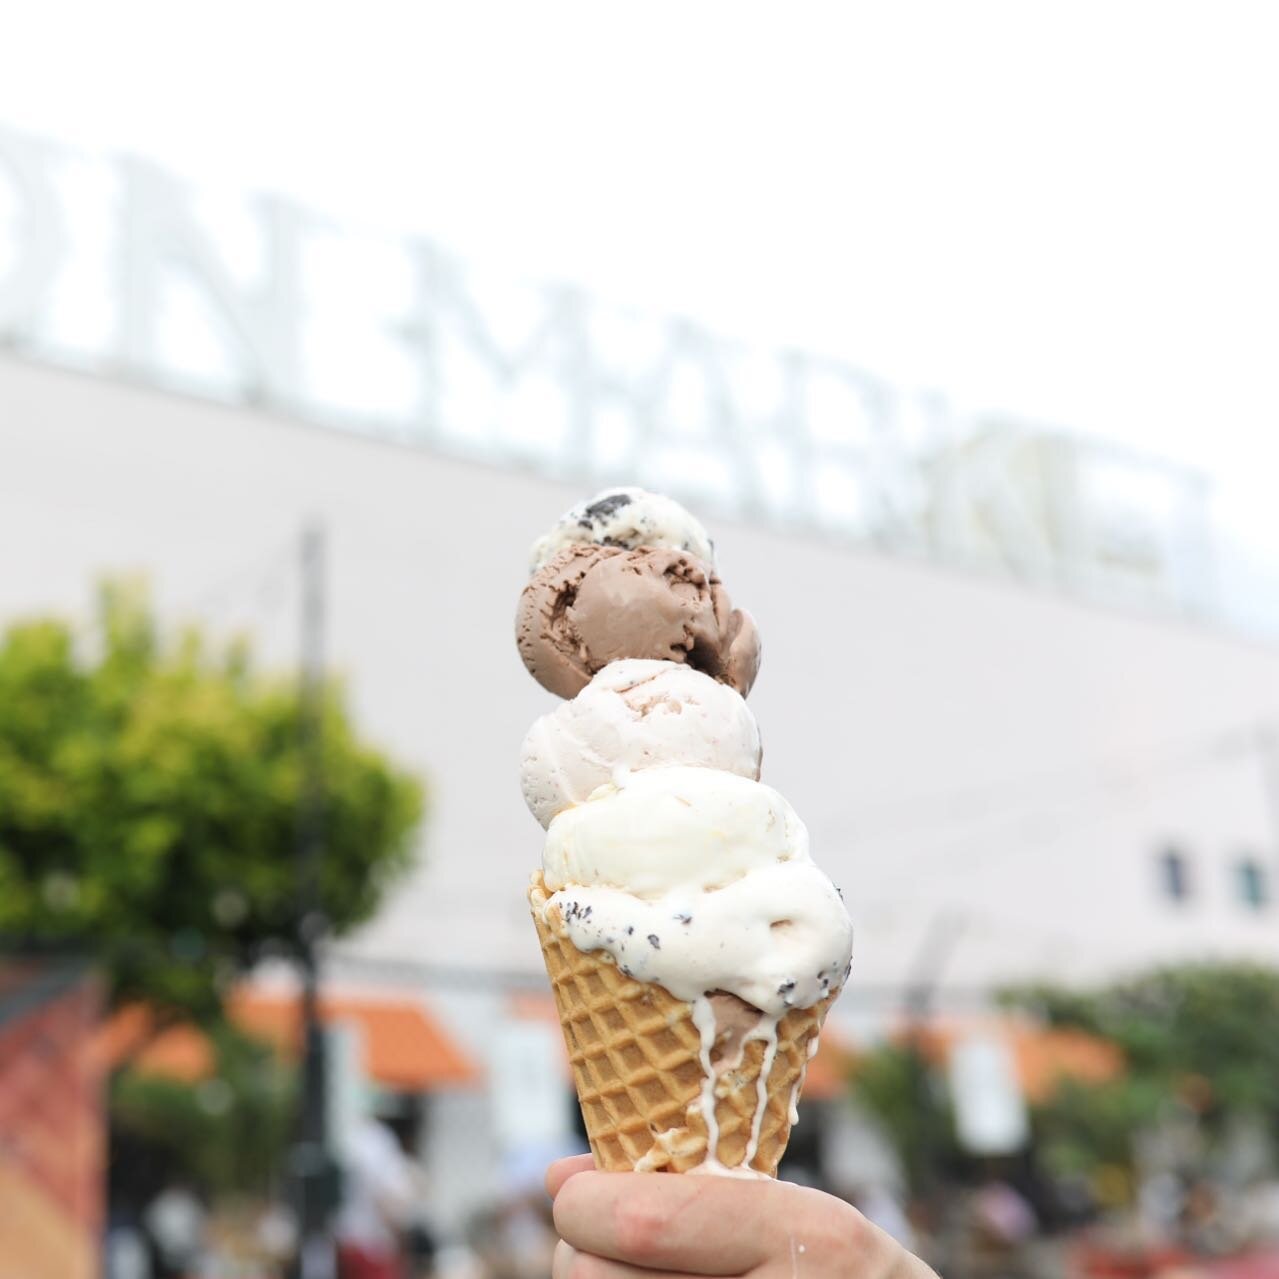 Happy National Ice Cream Day! 🍦